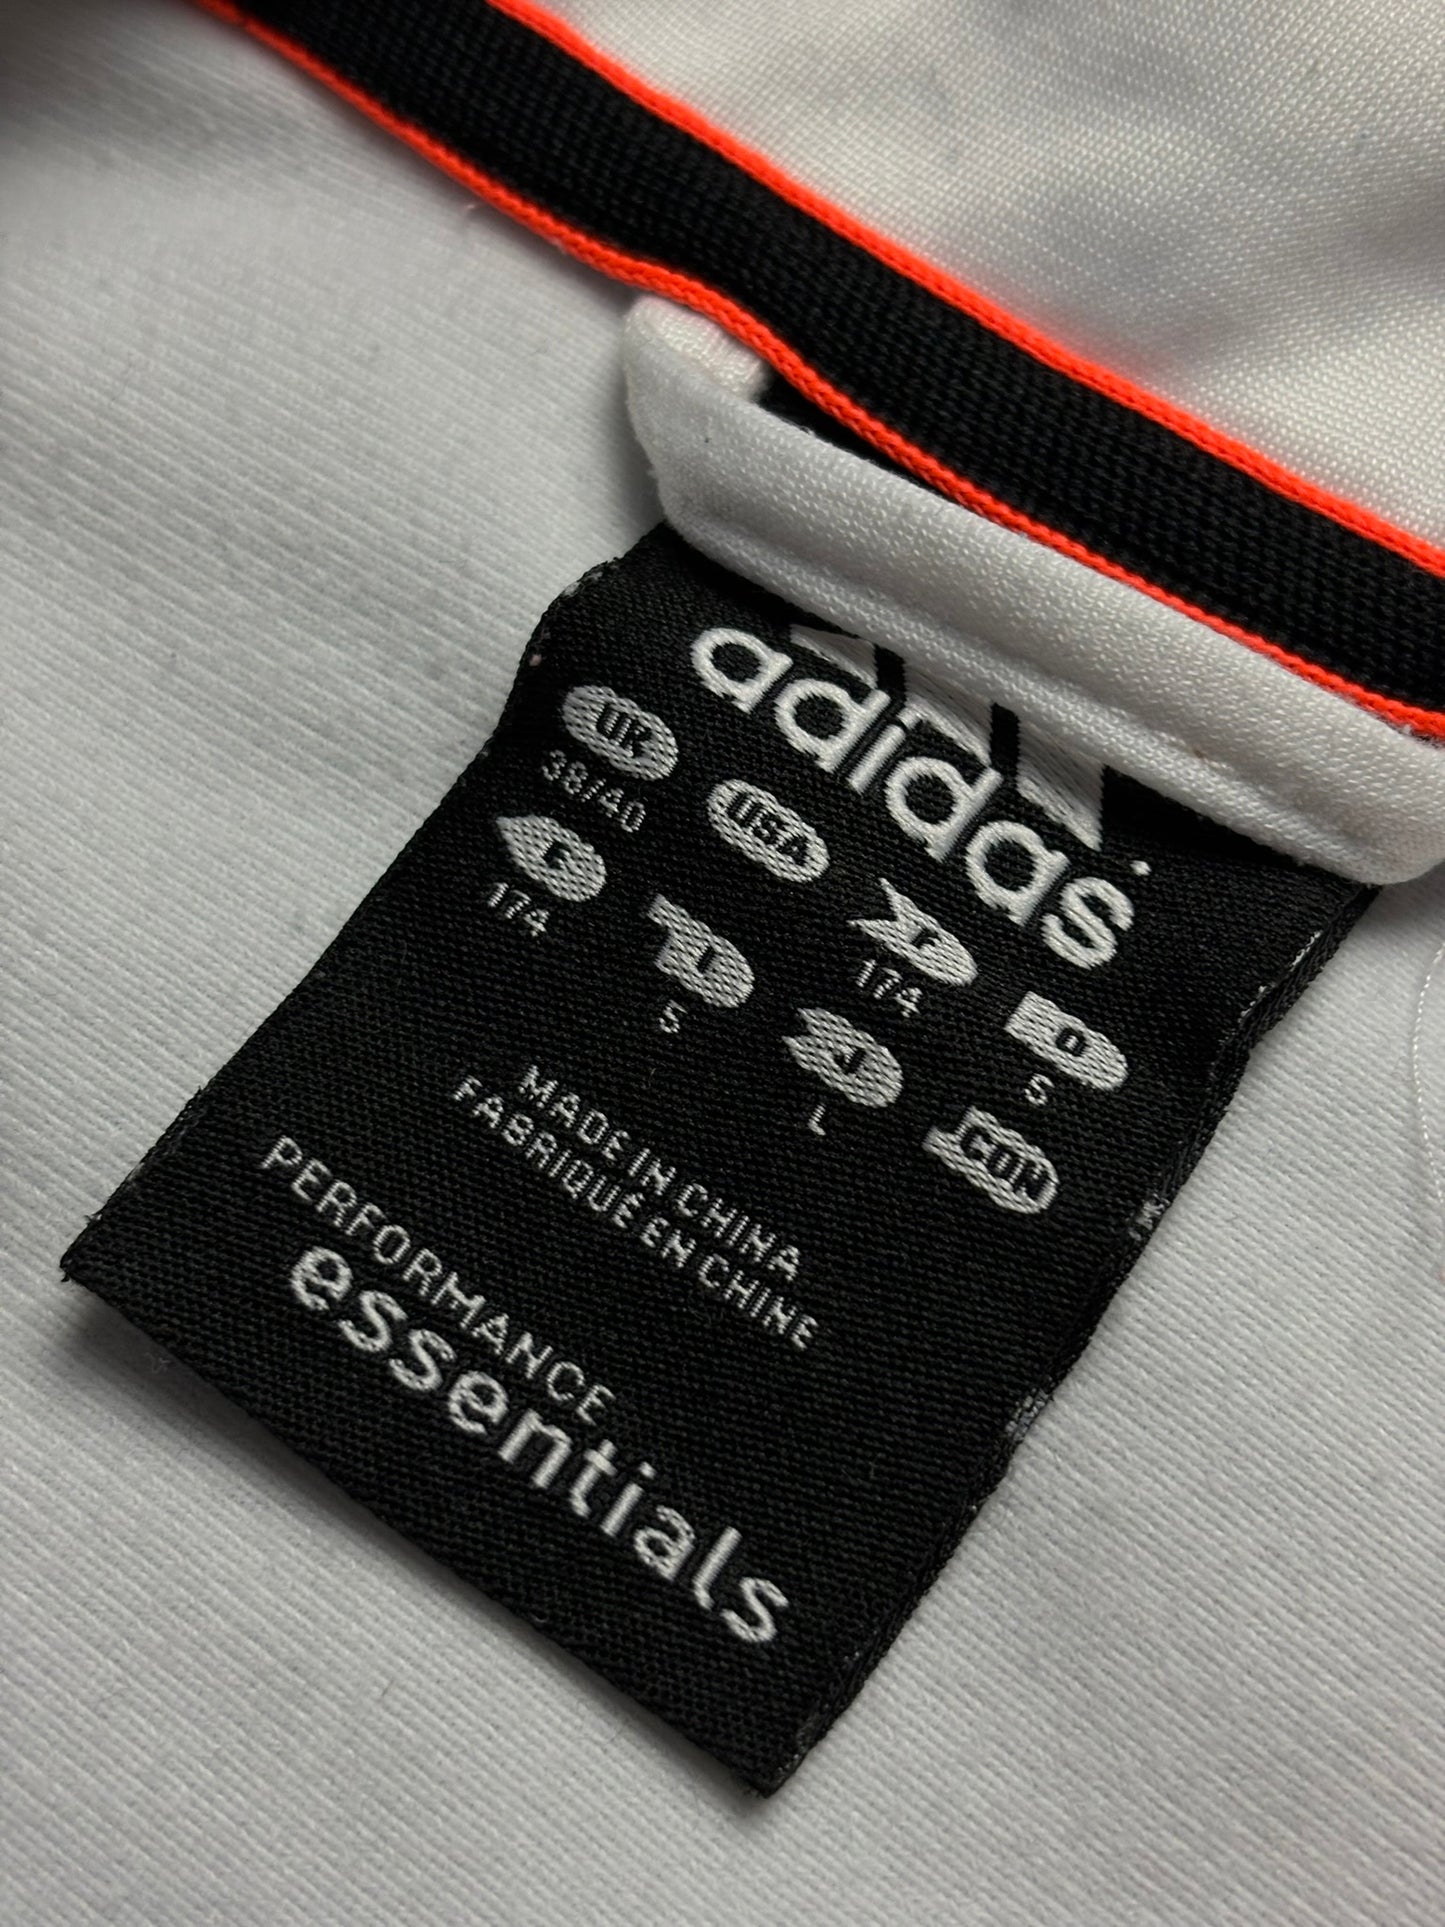 Sudadera cremallera Adidas retro football - Small